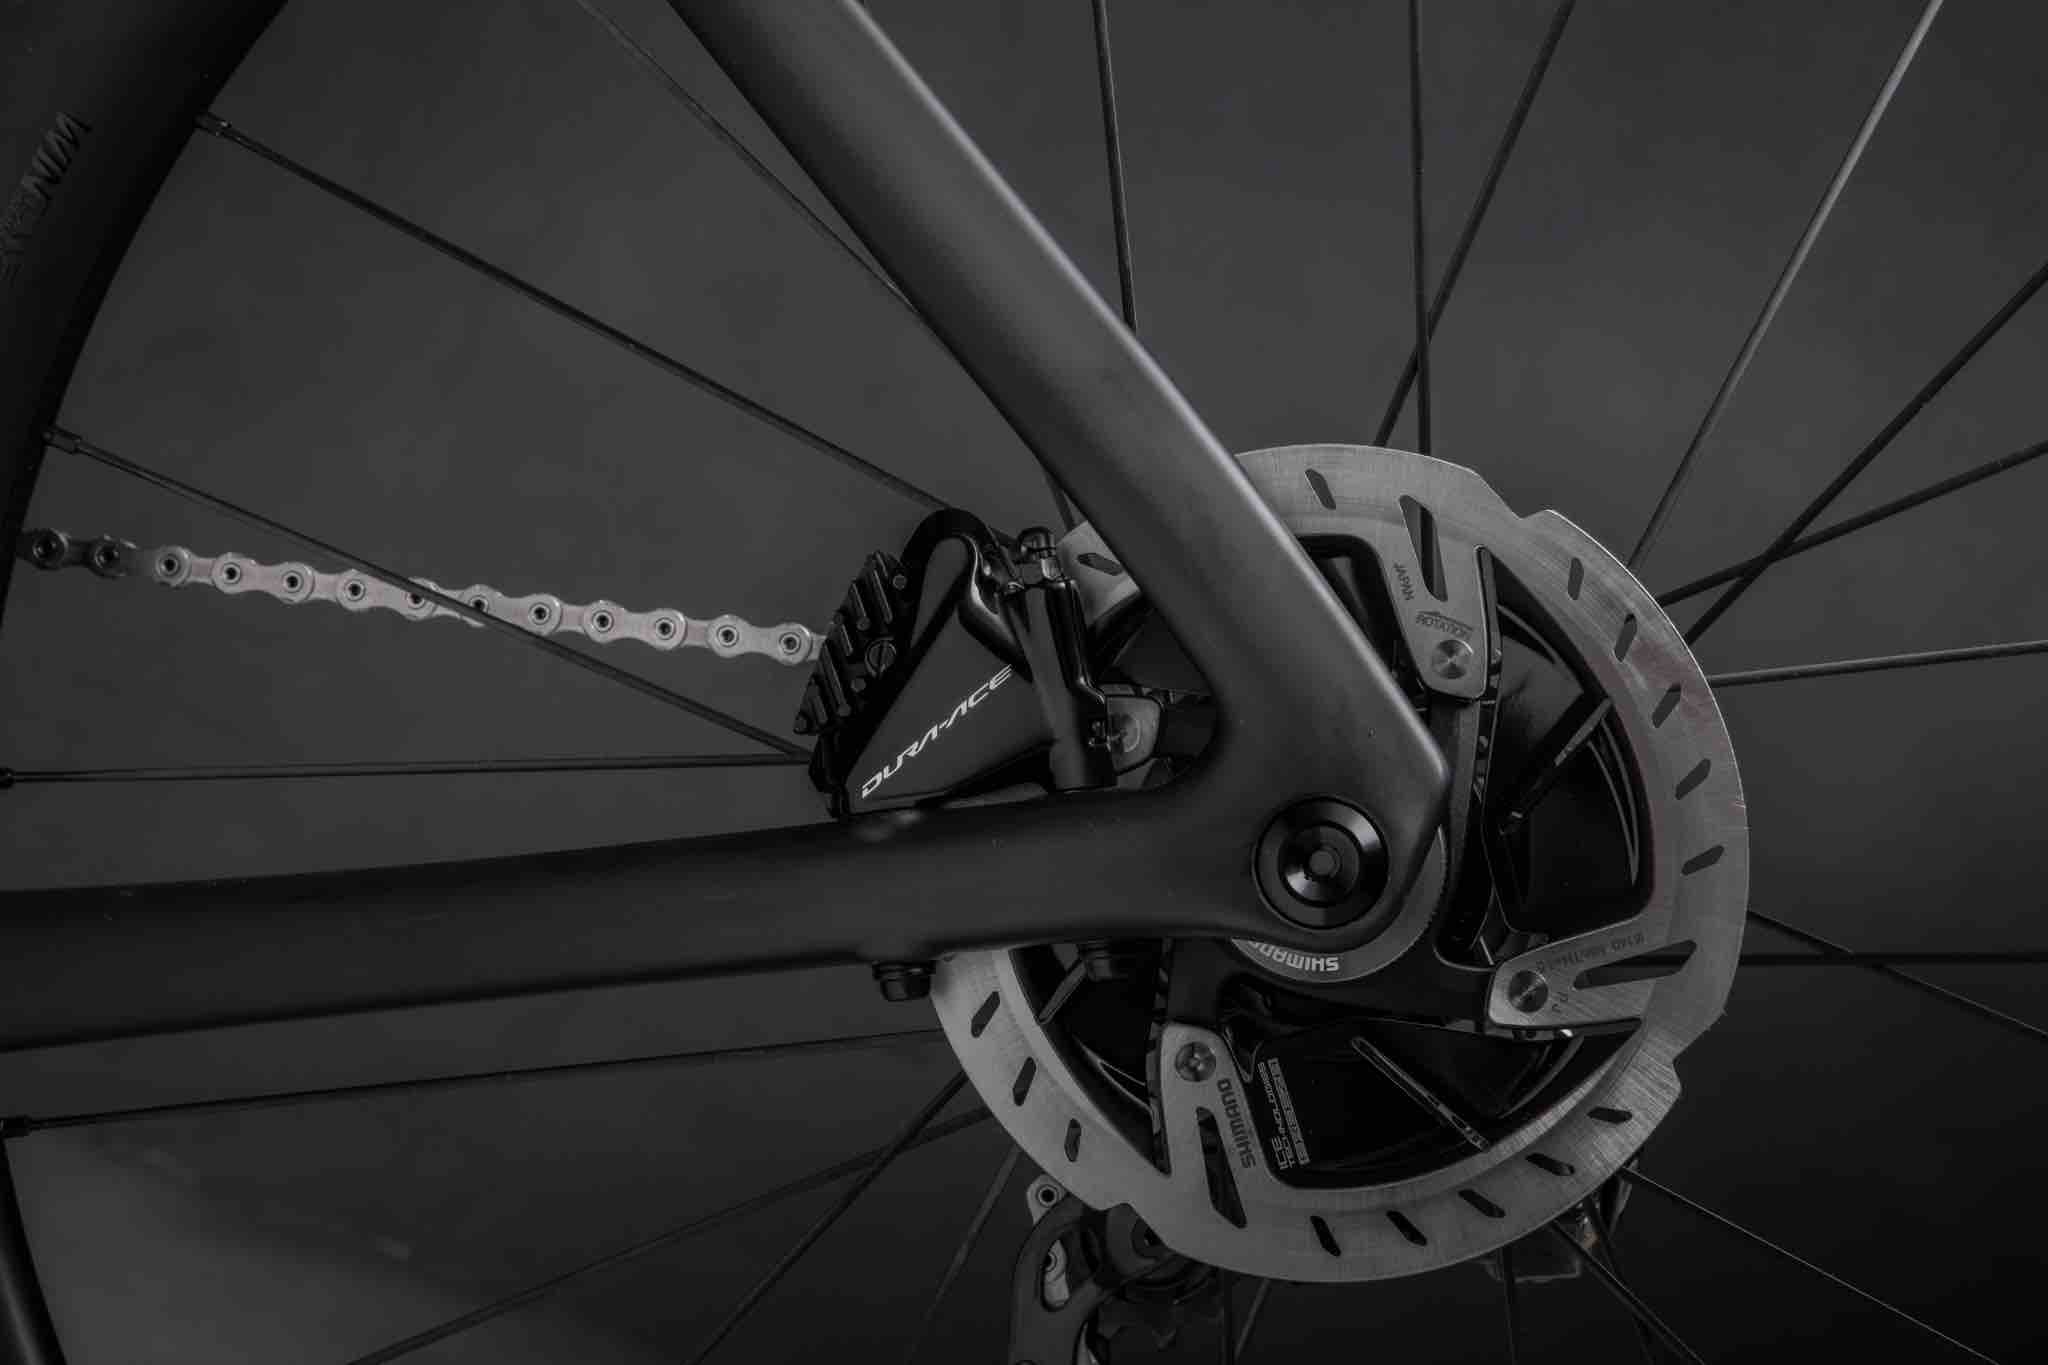 2019 Specialized Venge aero road bike tech details